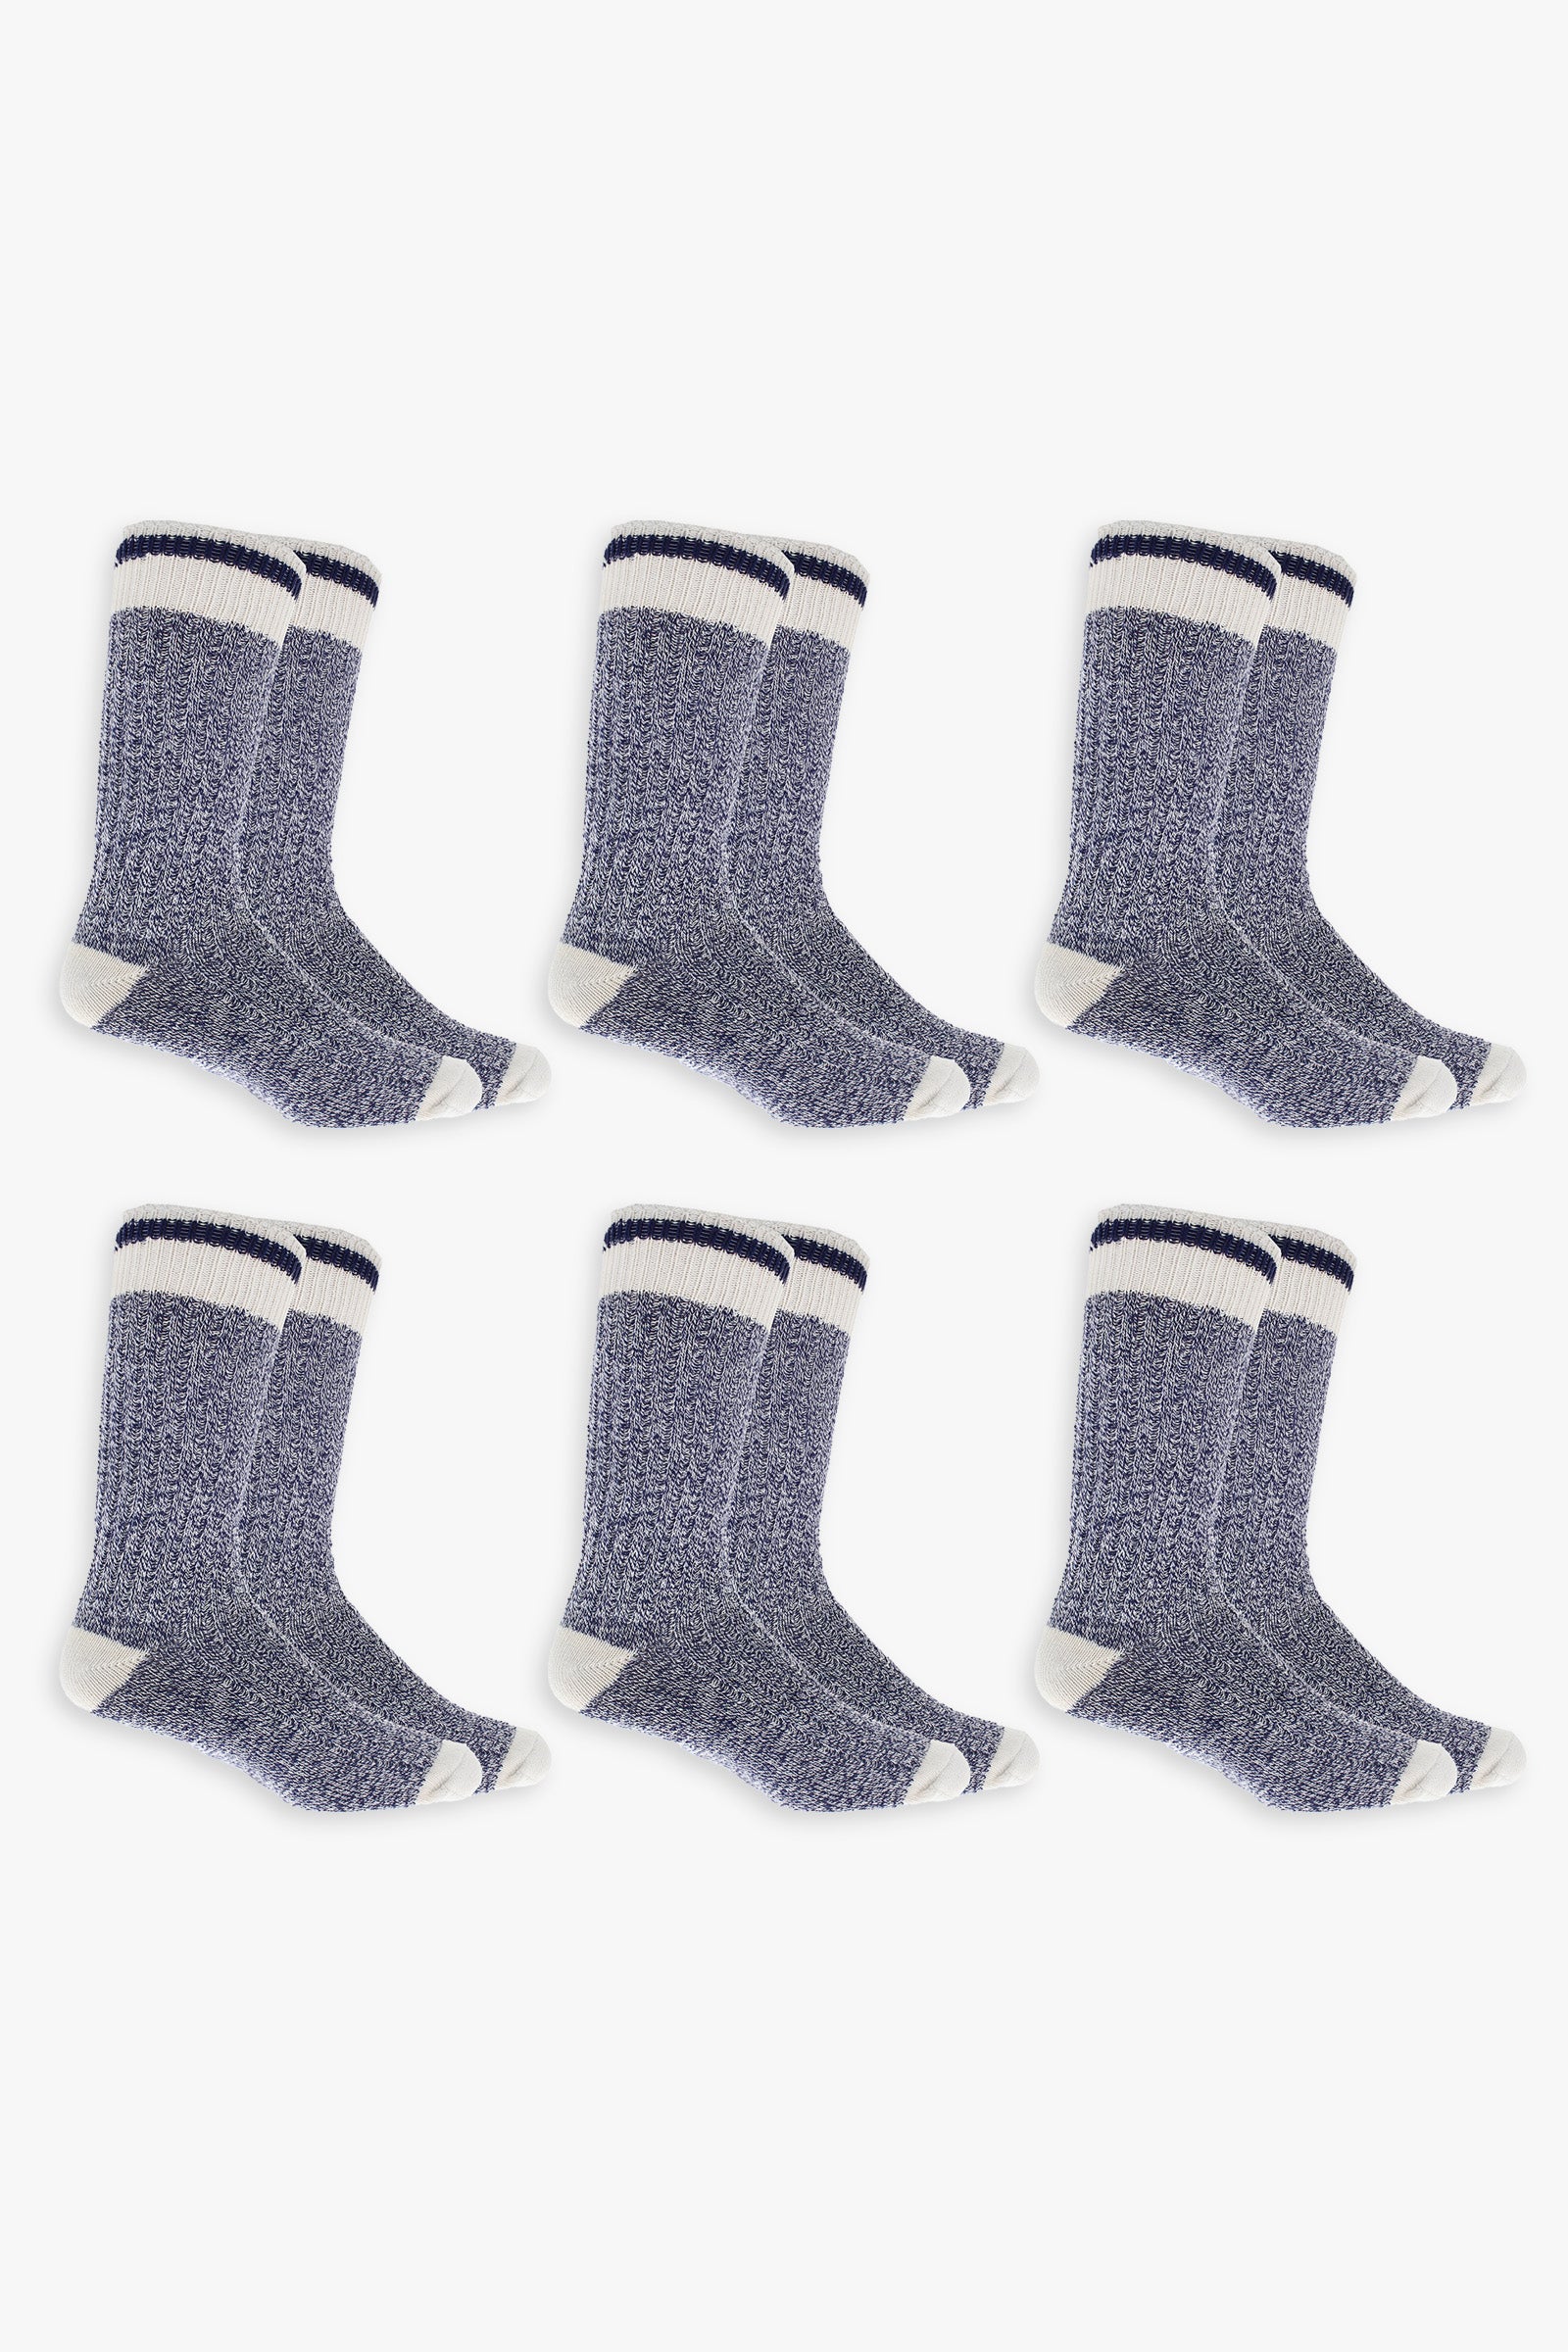 Great Northern Marled Blue Ladies Boot Socks